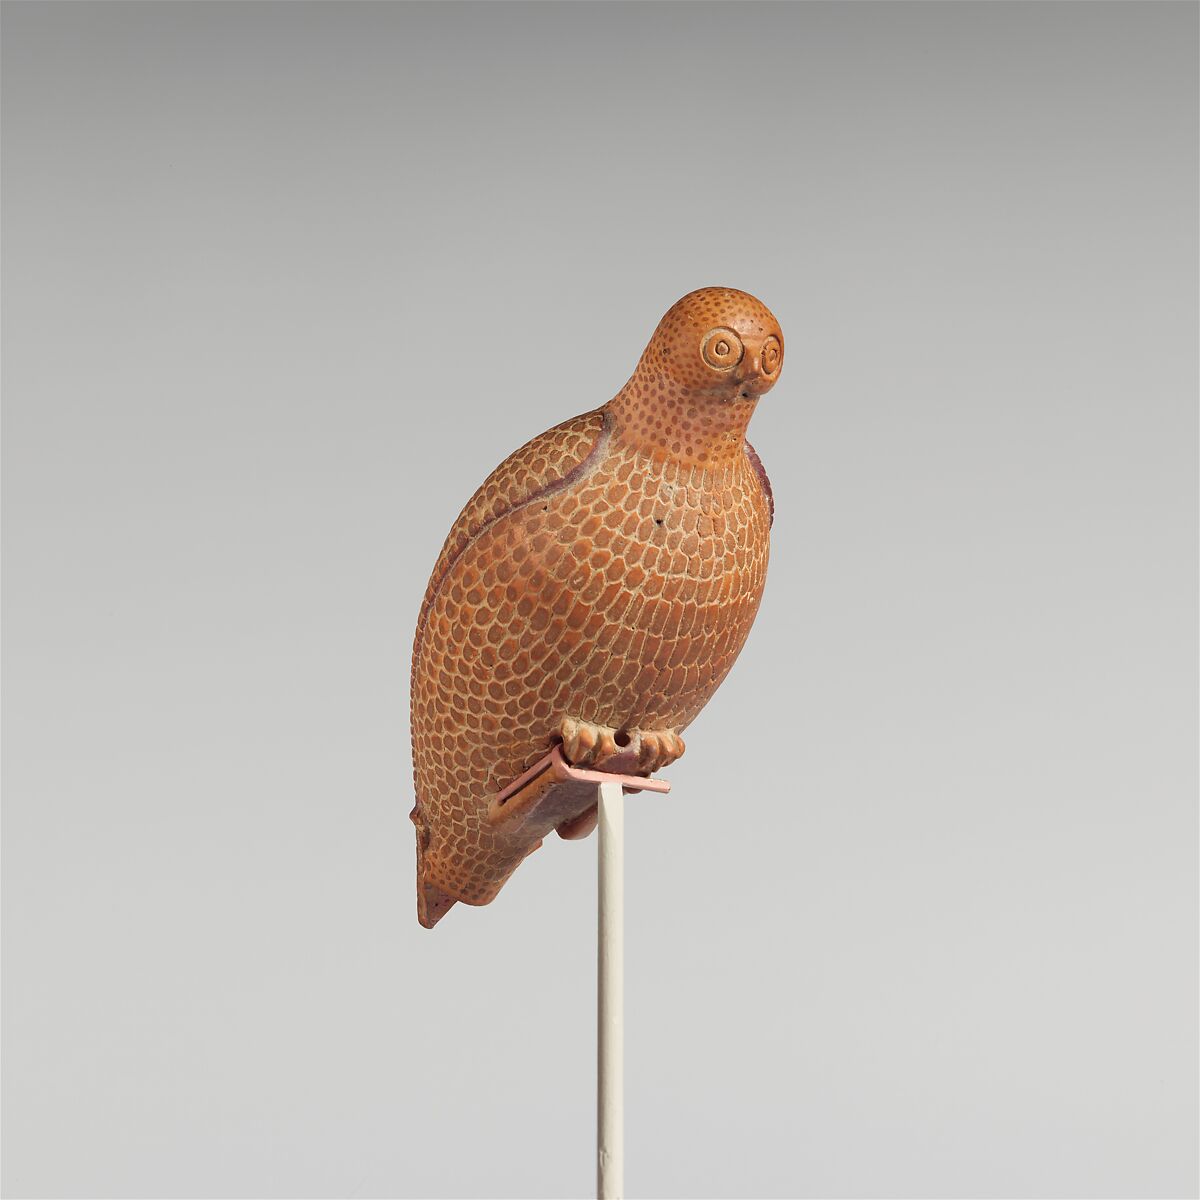 Terracotta vase in the form of a bird, Terracotta, Greek, Corinthian